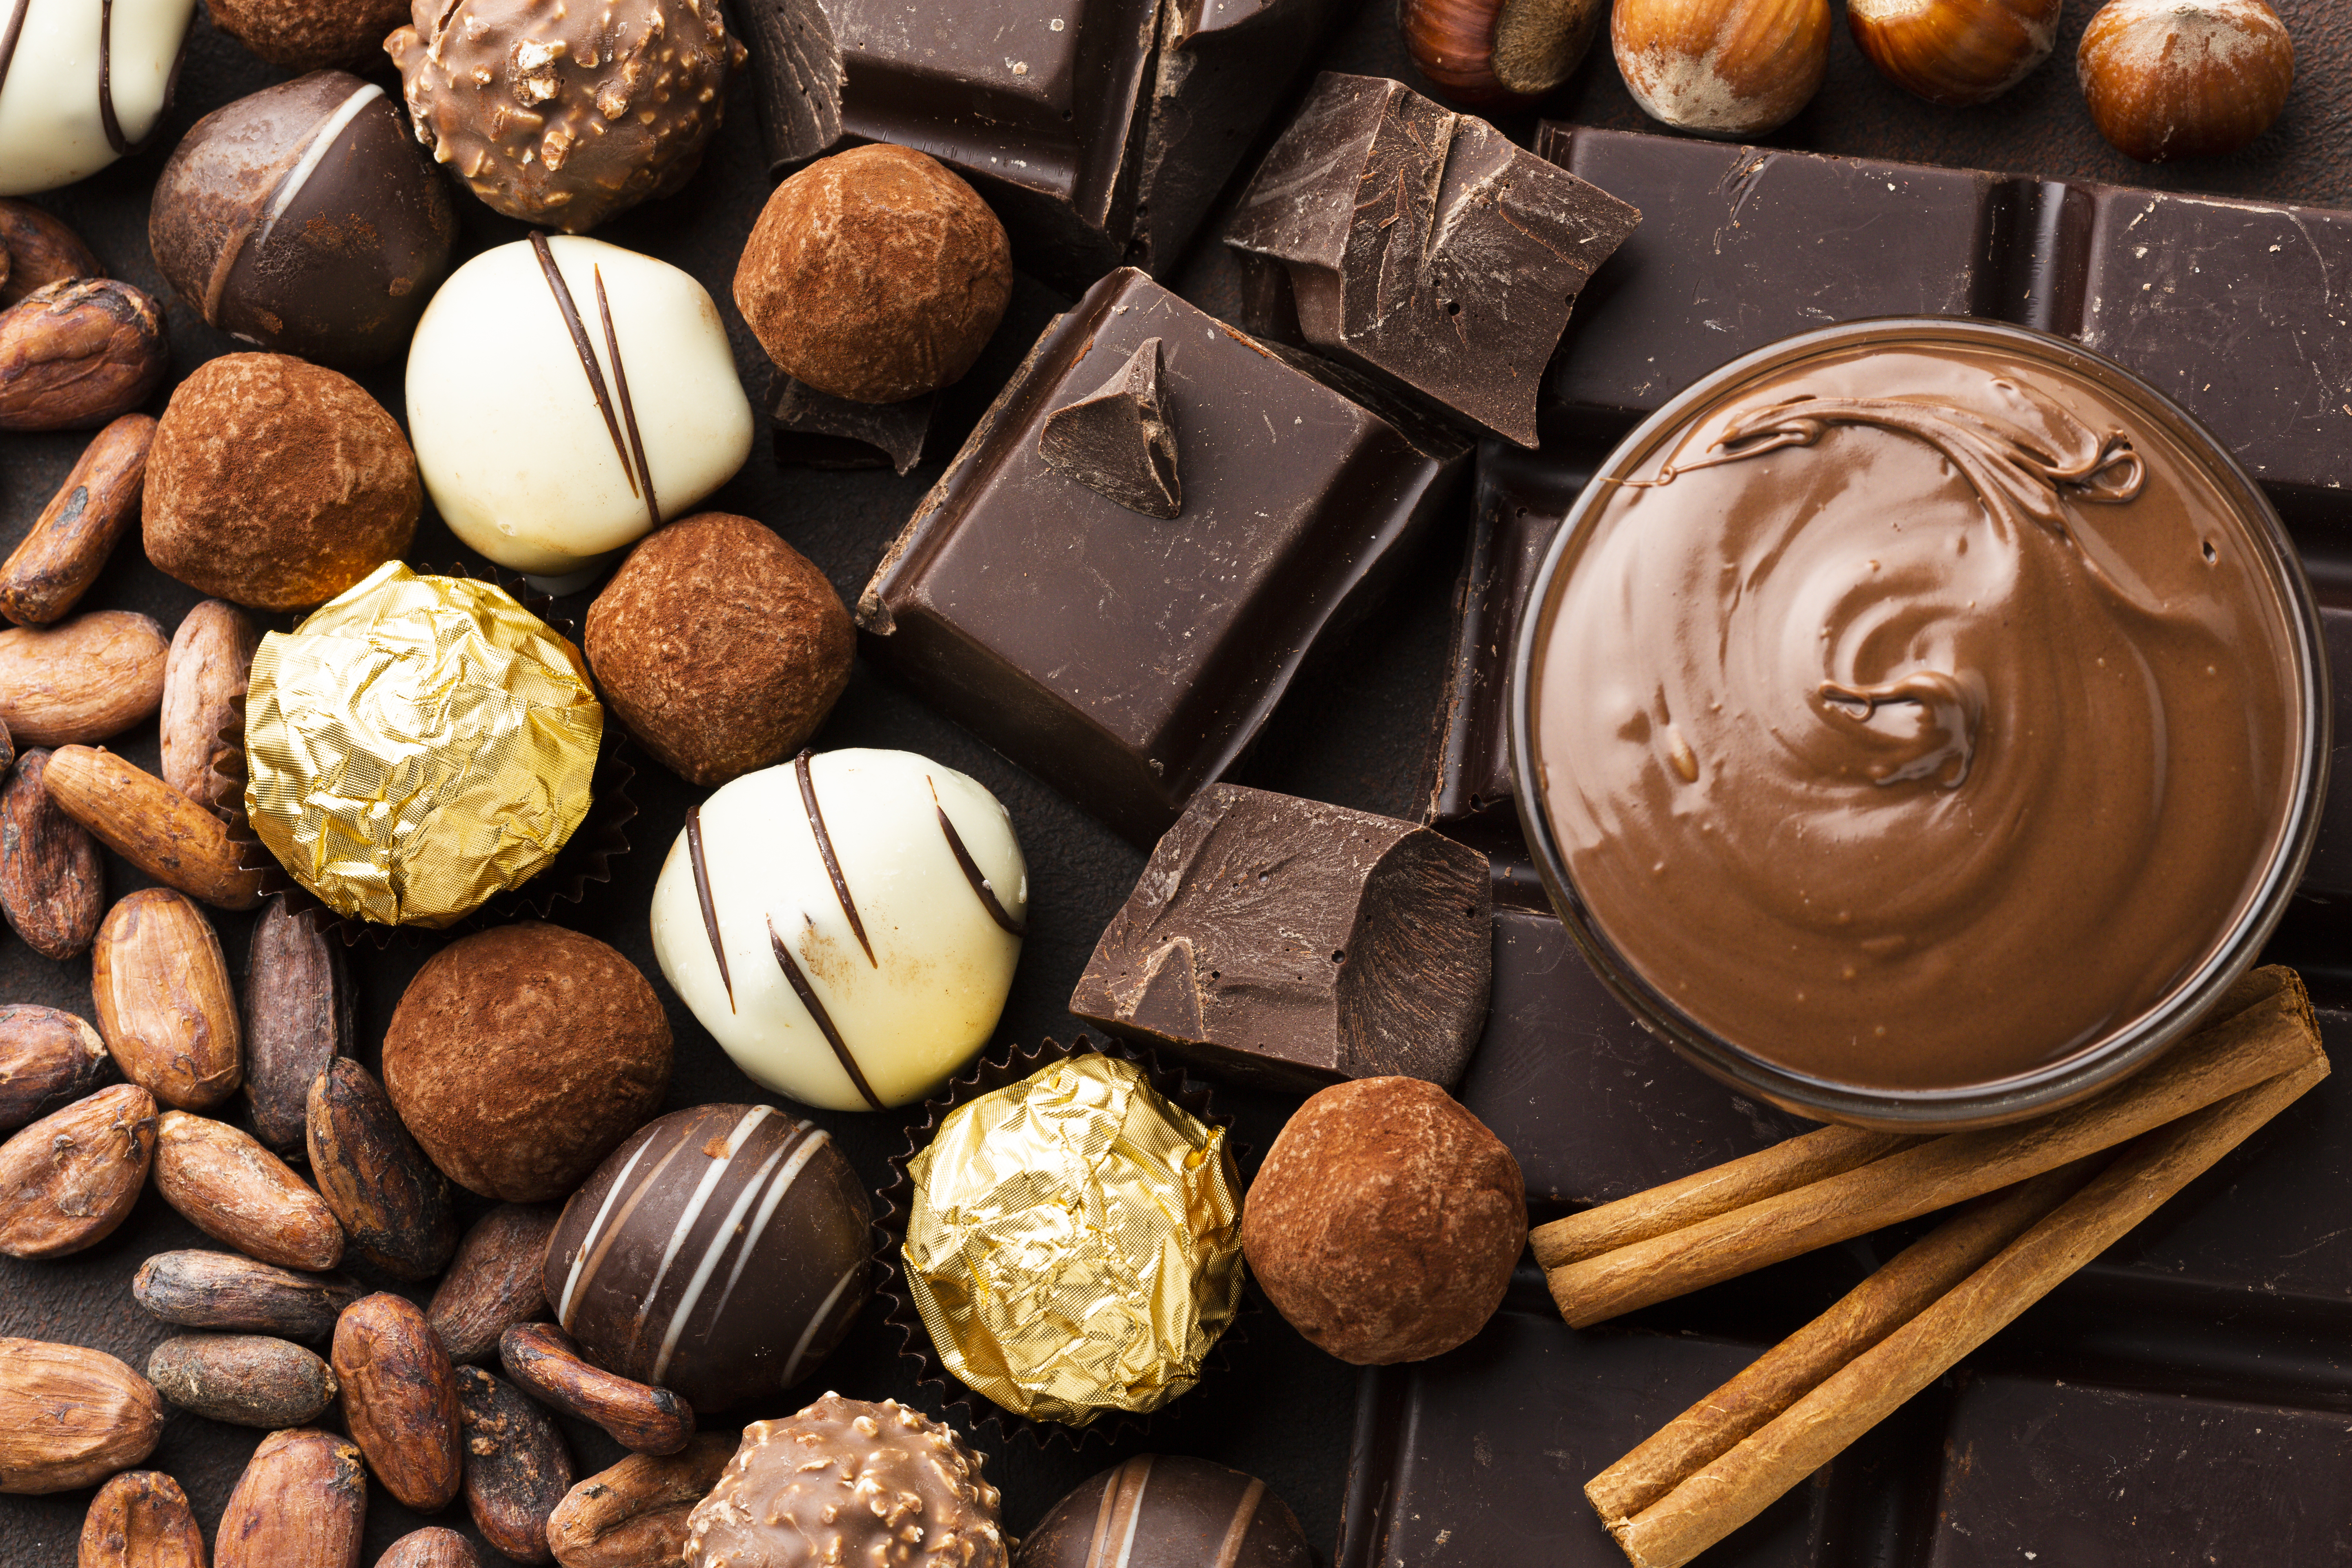 Fungsi cokelat compound di industri makanan